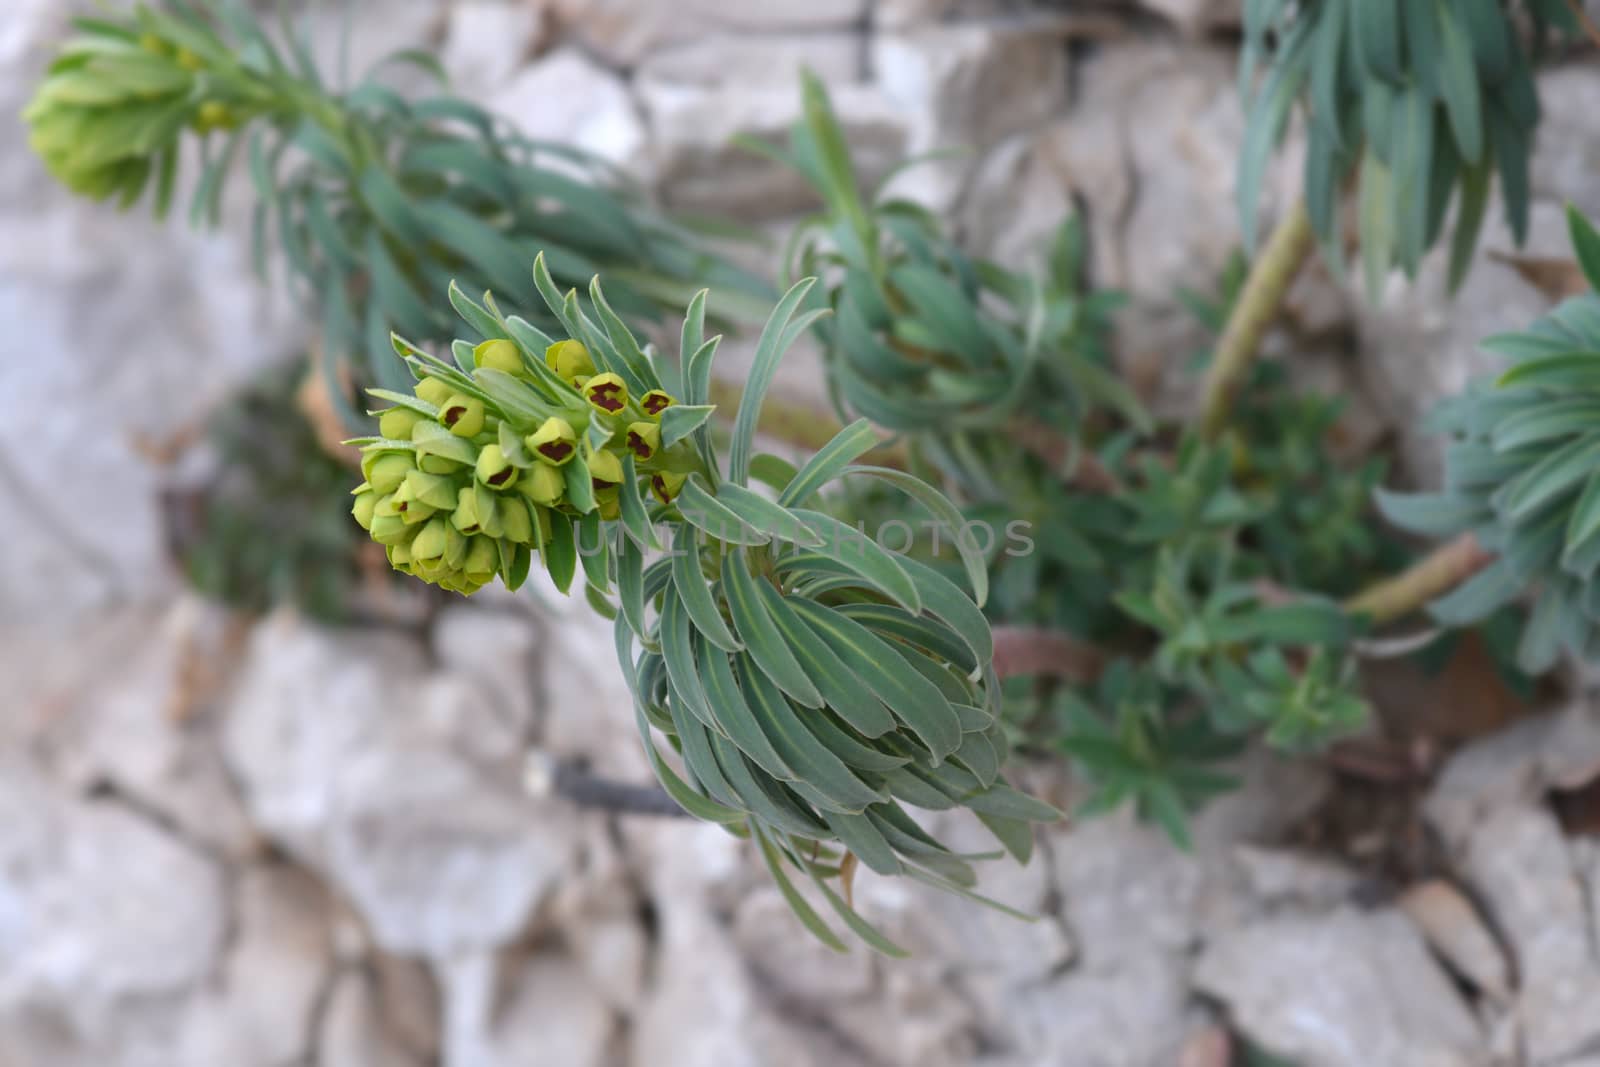 Mediterranean spurge - Latin name - Euphorbia characias